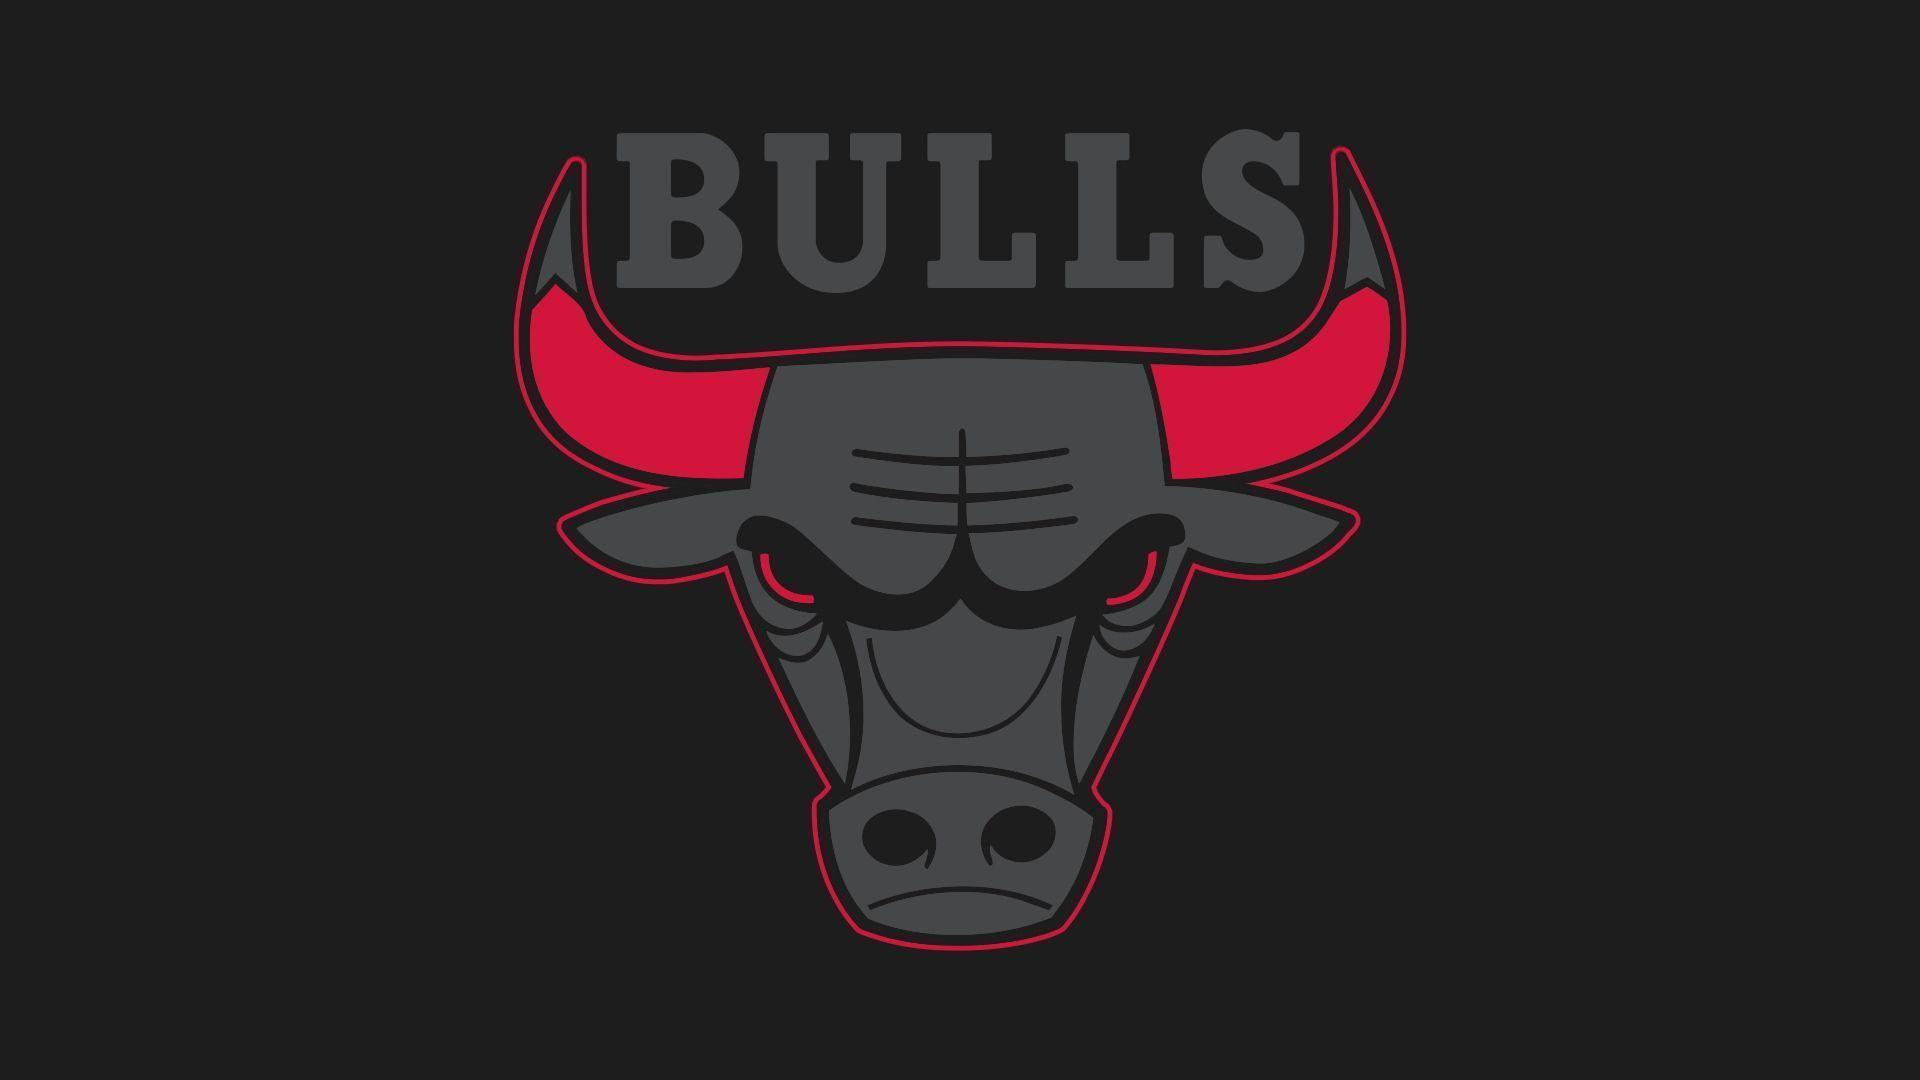 Chicago Bulls Wallpaper HD 2016. Wallpaper, Background, Image